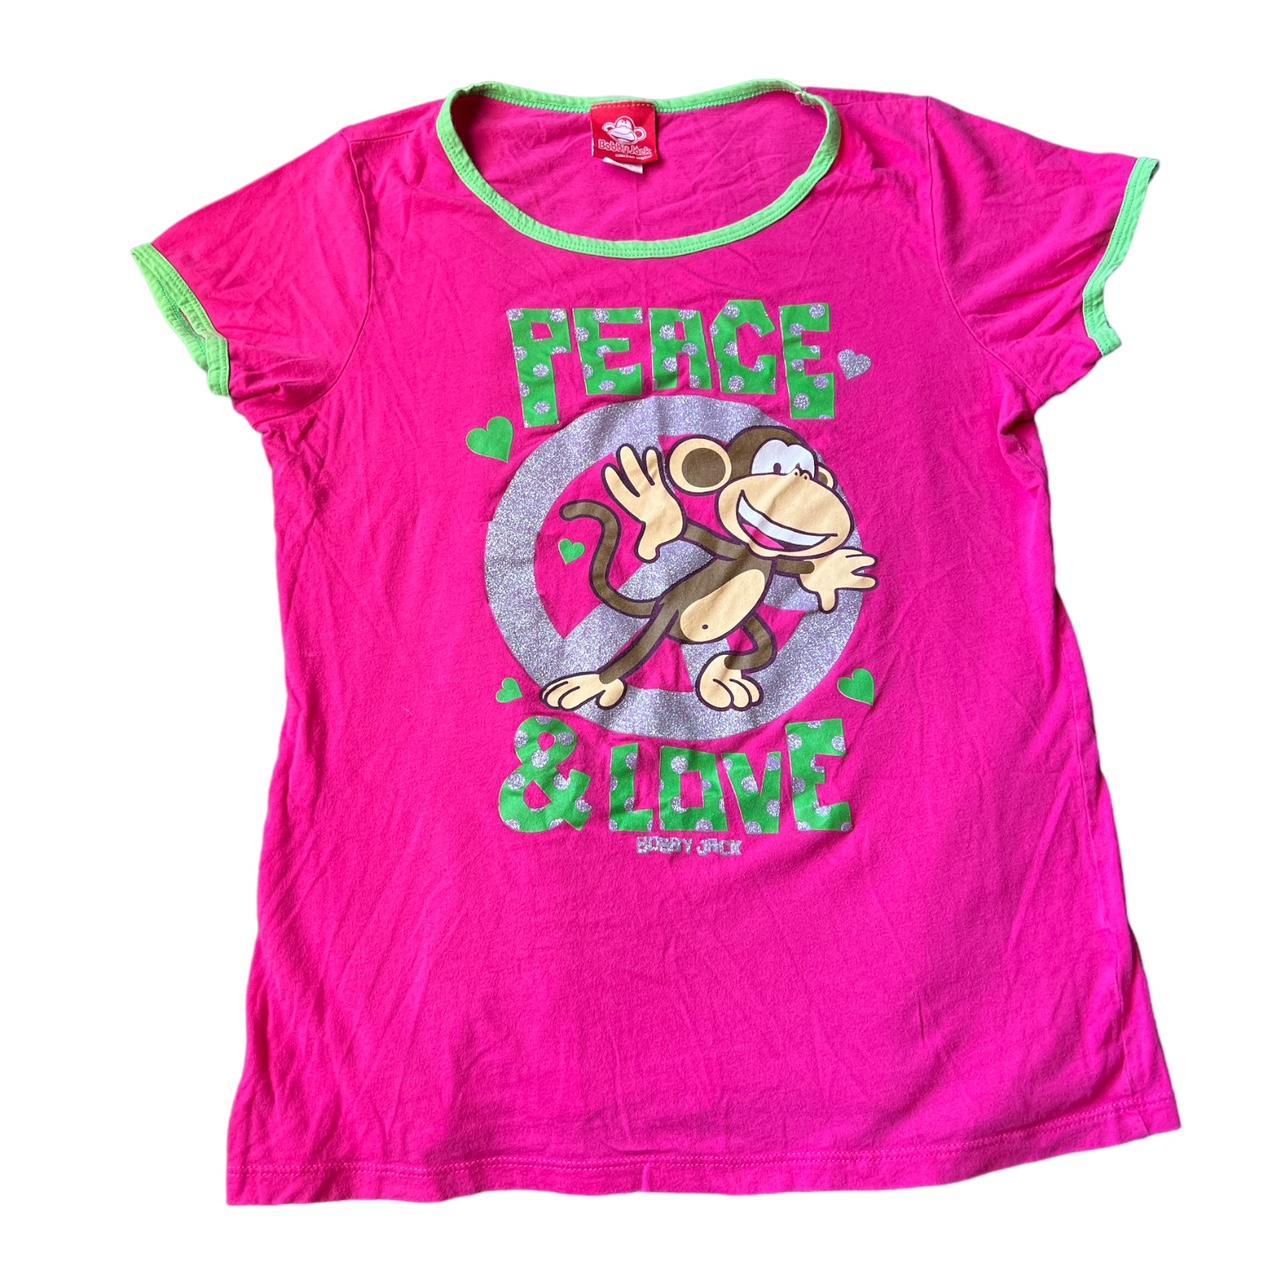 Bobby Jack Women's Pink and Green T-shirt | Depop